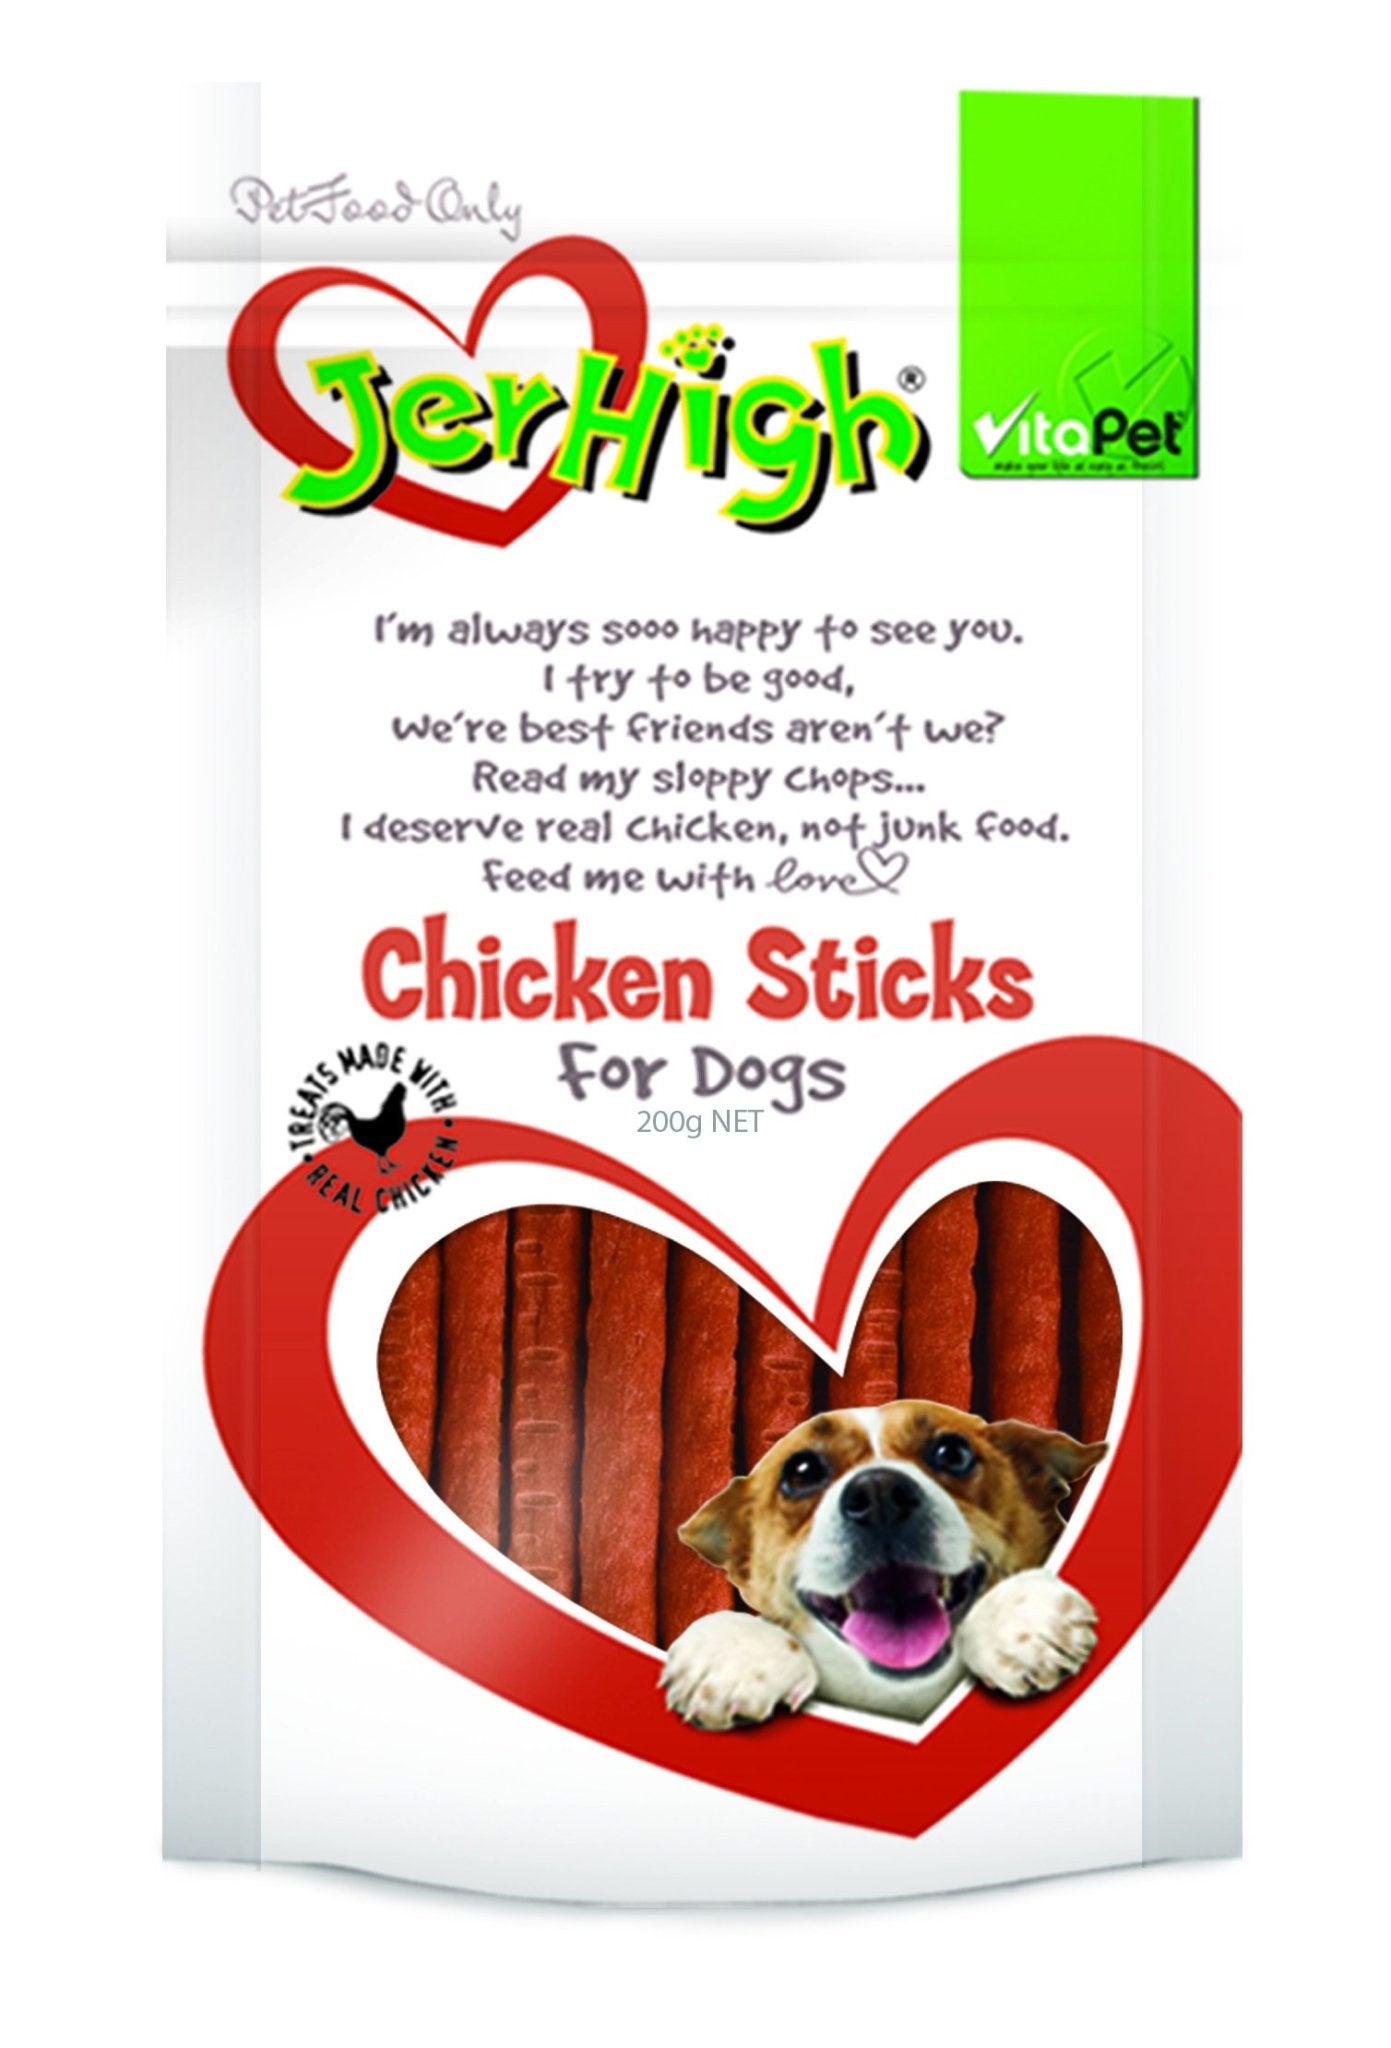 Vitapet Jerhigh Chicken Sticks - Woonona Petfood & Produce